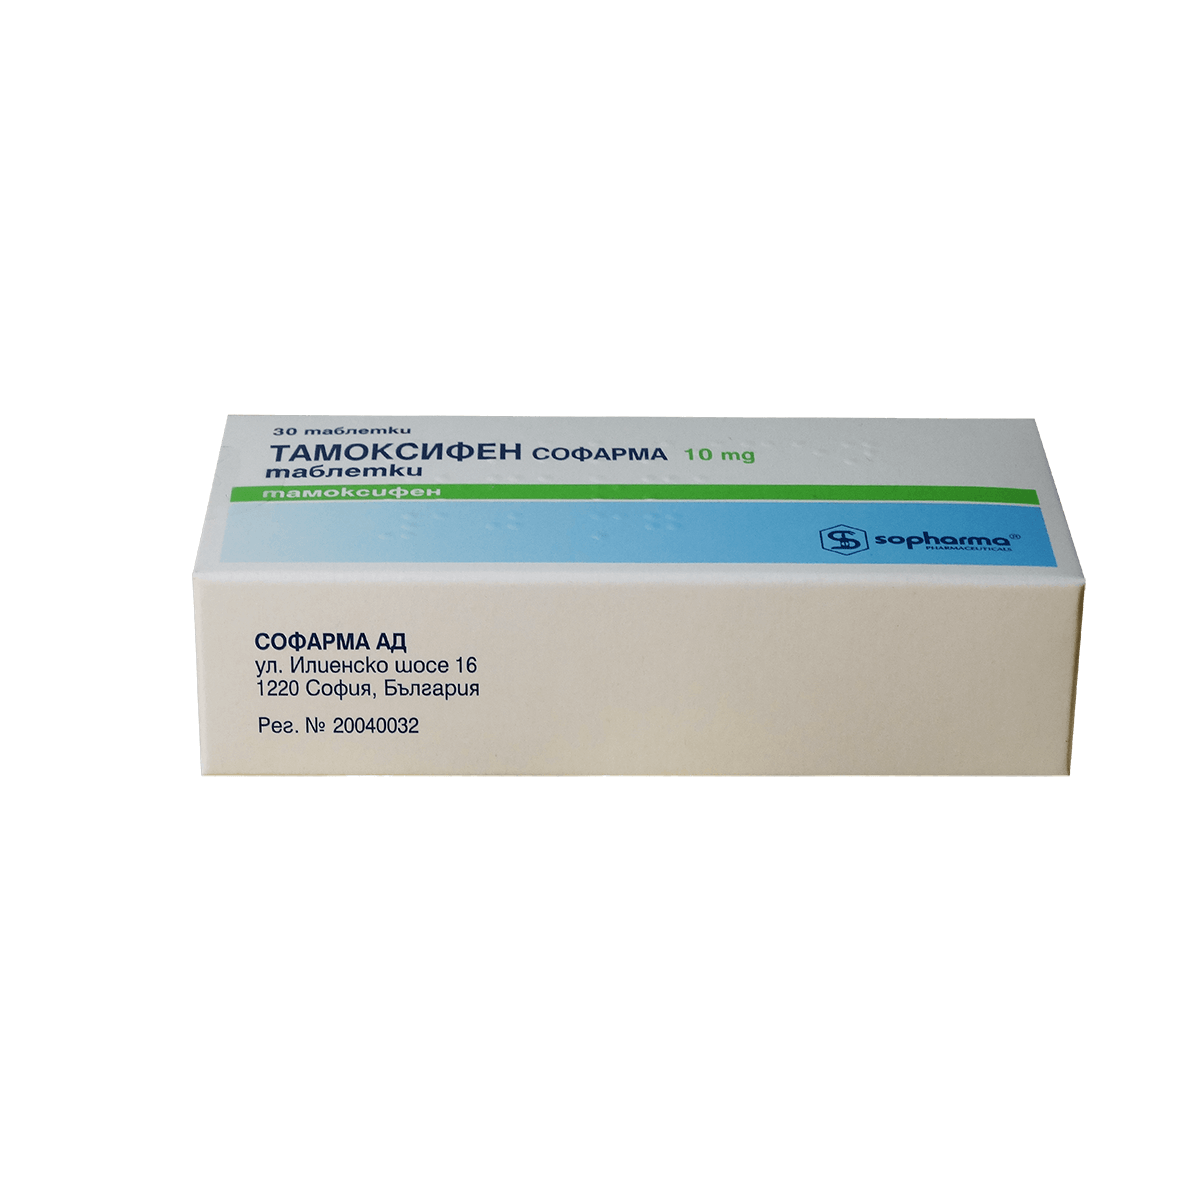 Tamoxifen-tablets-10mg-antiestrogen-nolvadex-Sopharma-muscle-hunter-xsf-group